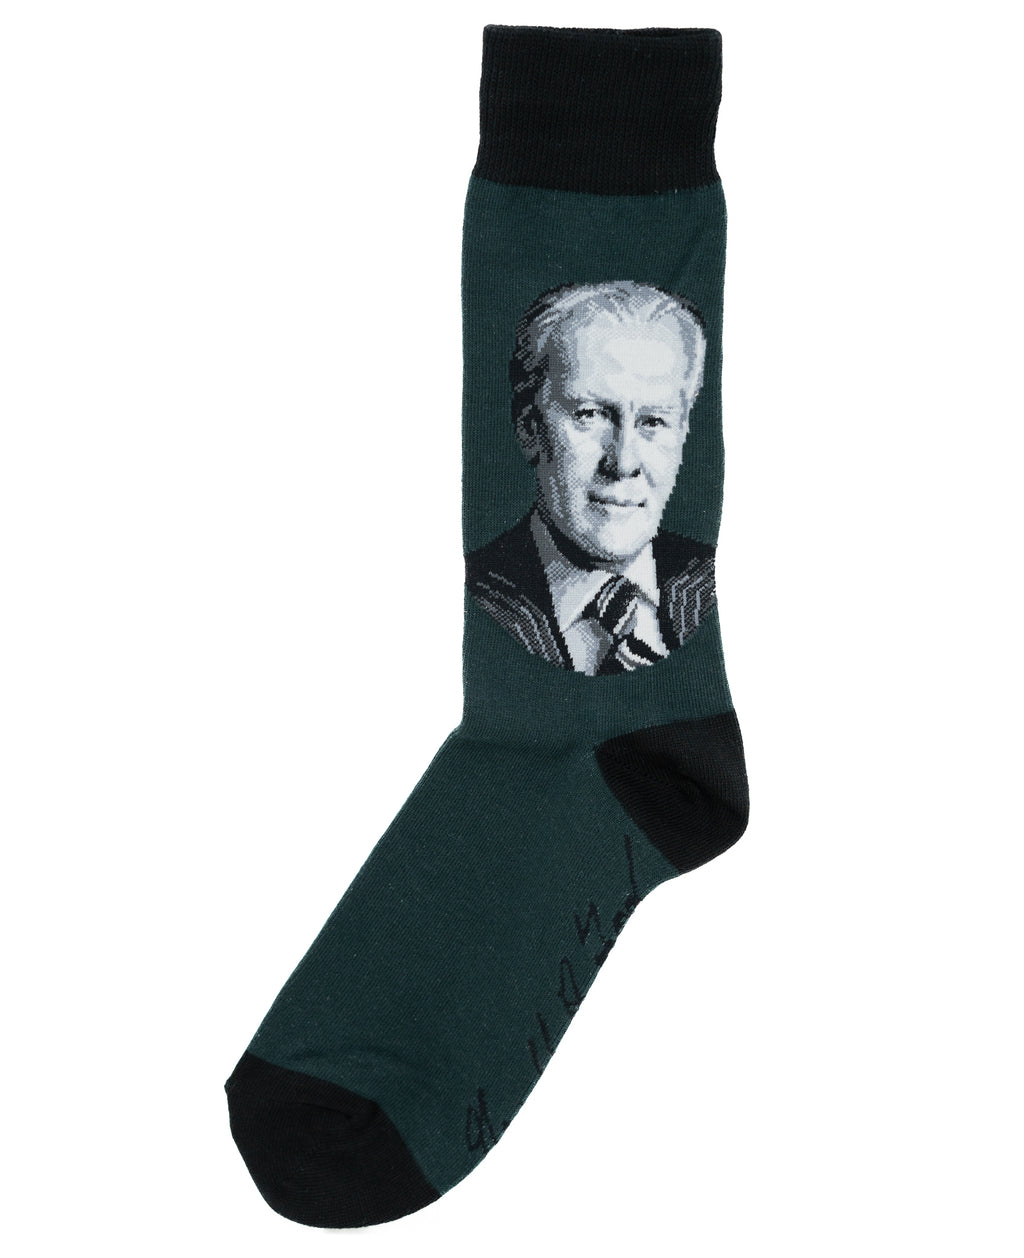 Gerald Ford Portrait Socks (Men's)